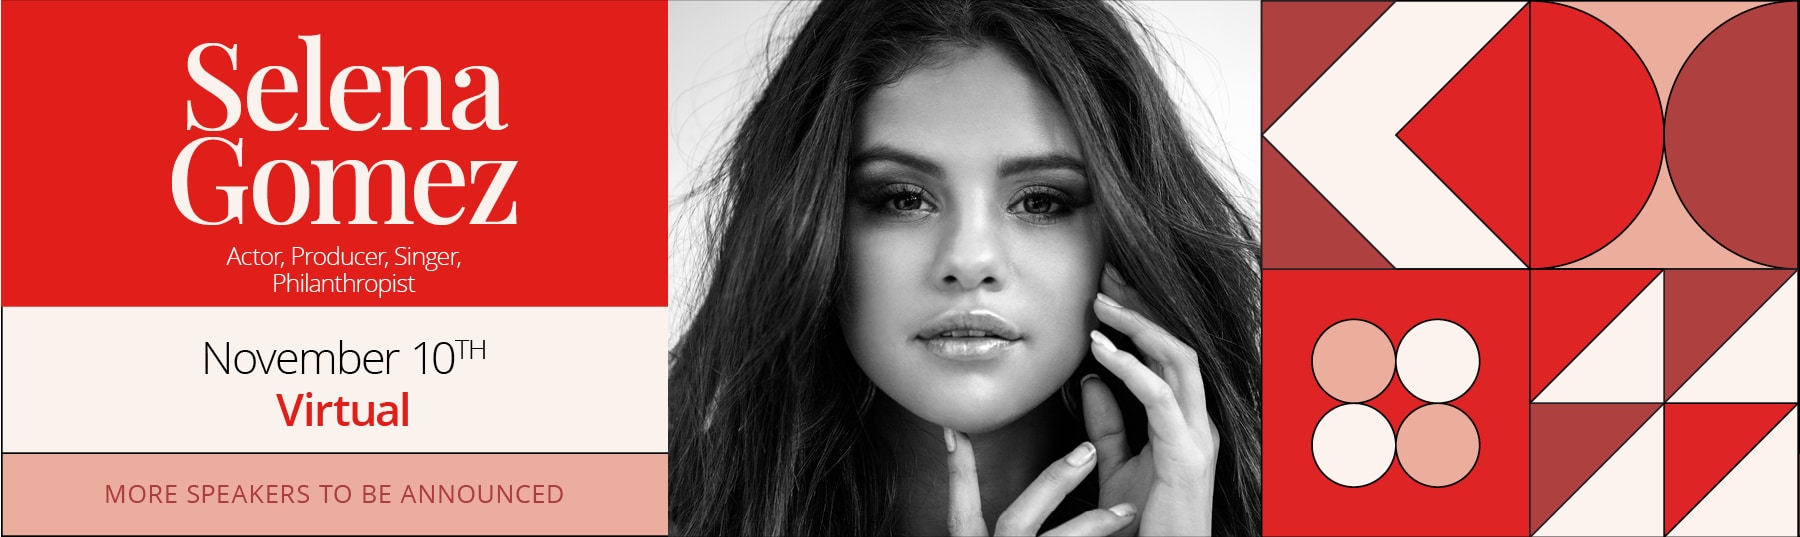 See actor, producer, singer and philanthropist Selena Gomez on November 10!